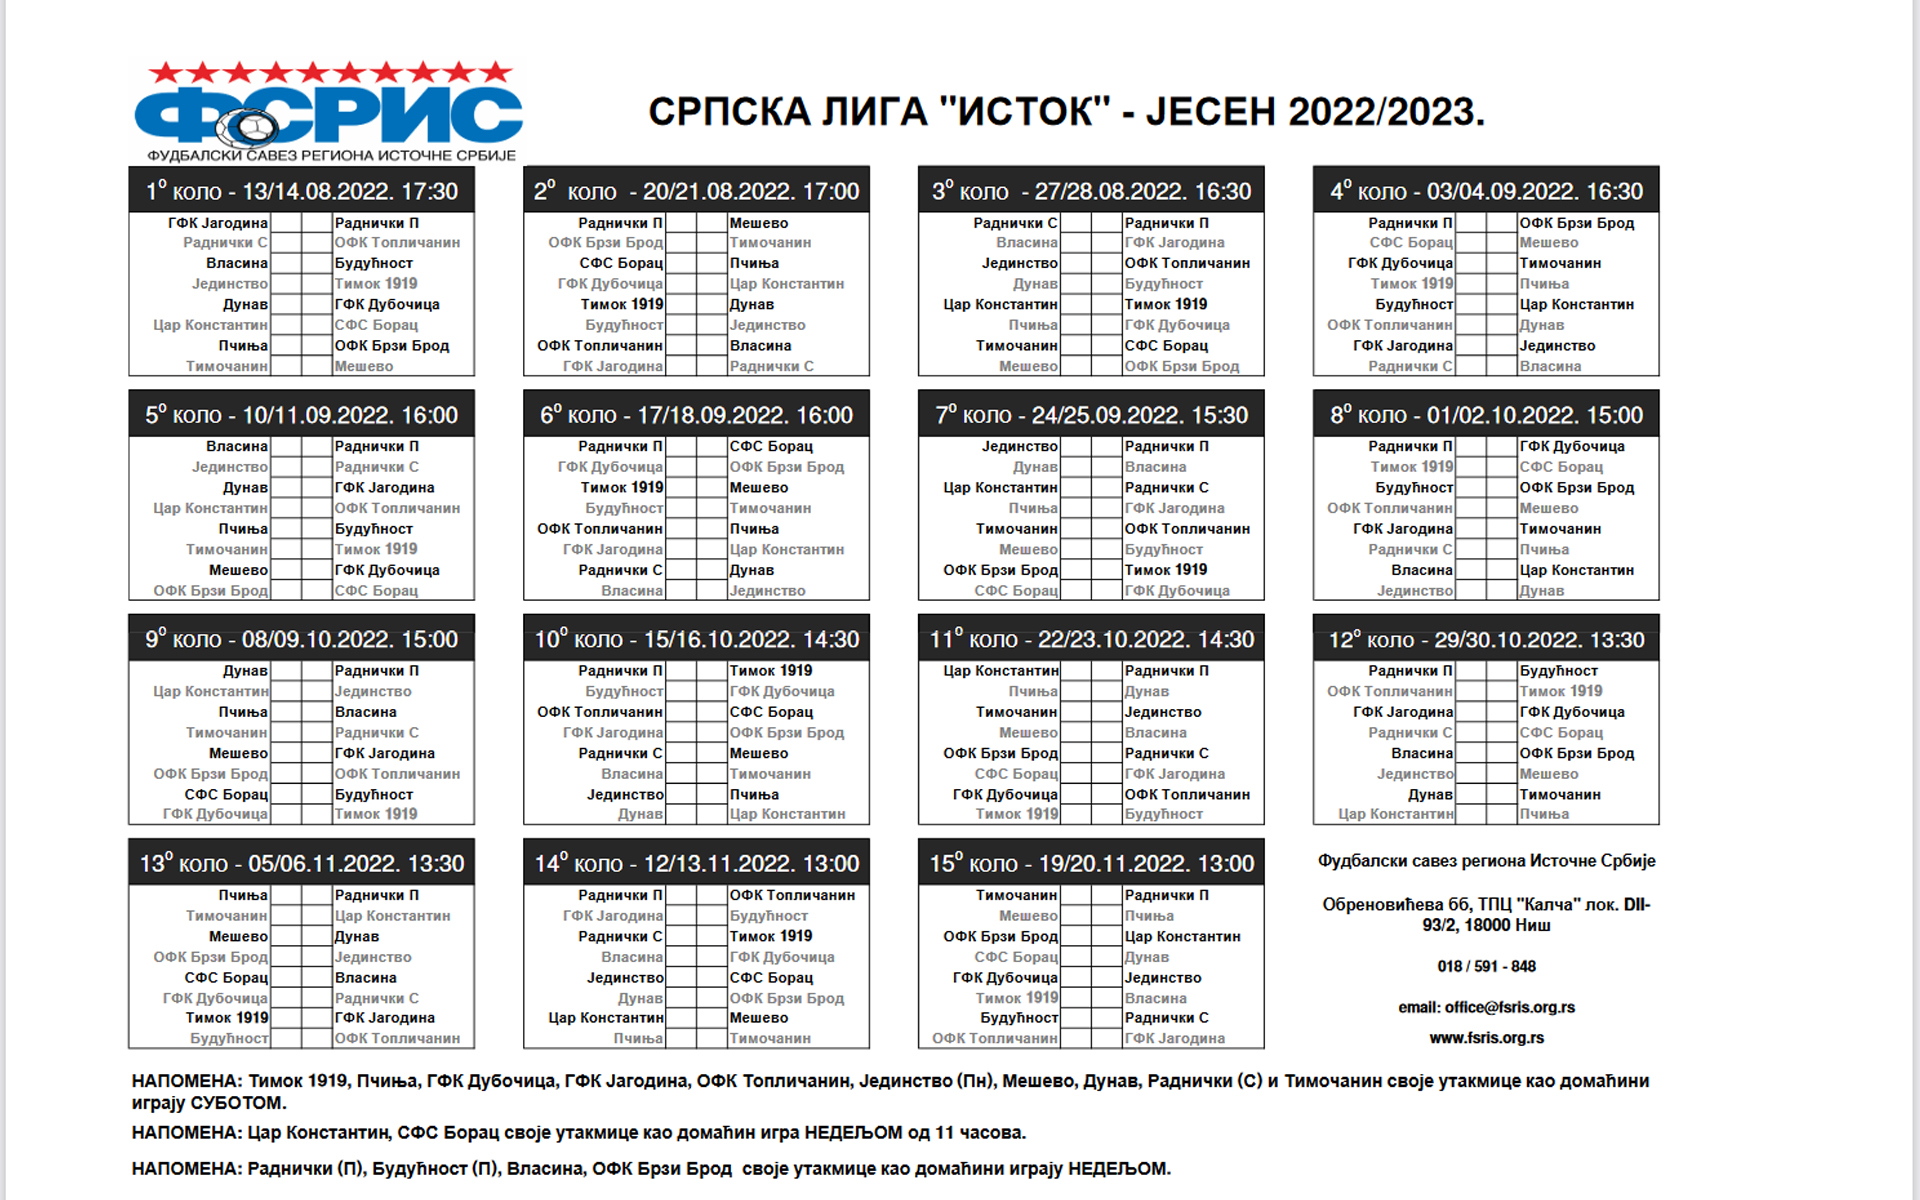 Poznat raspored jesenjeg dela sezone u Srpskoj ligi, gradski derbi polovinom novembra